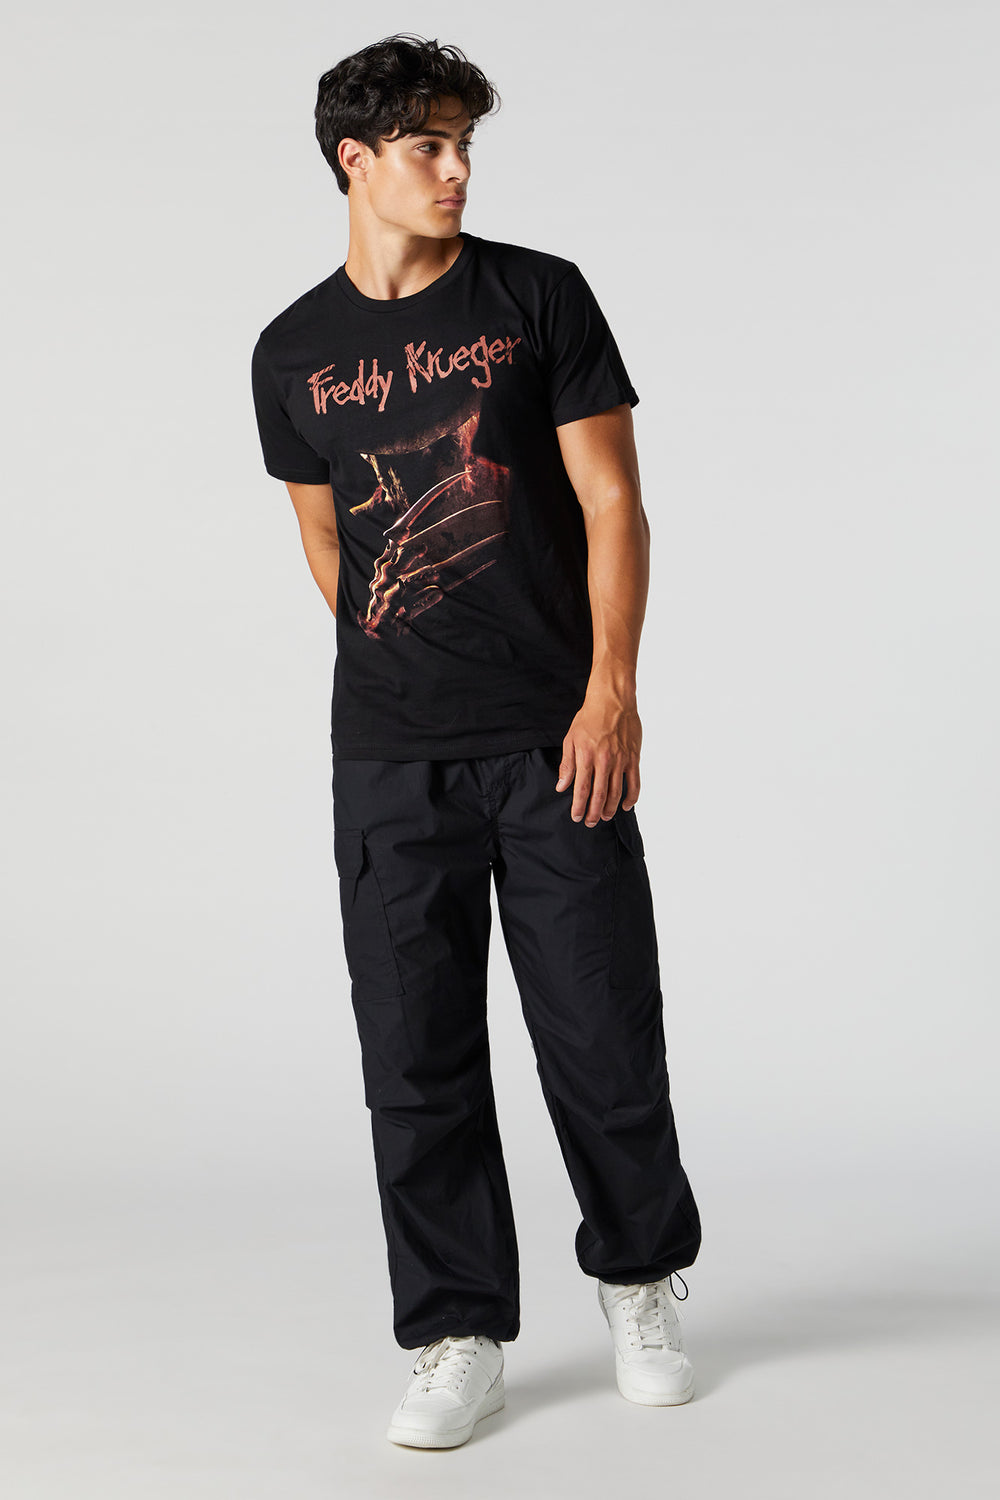 Freddy Krueger Graphic T-Shirt Freddy Krueger Graphic T-Shirt 4